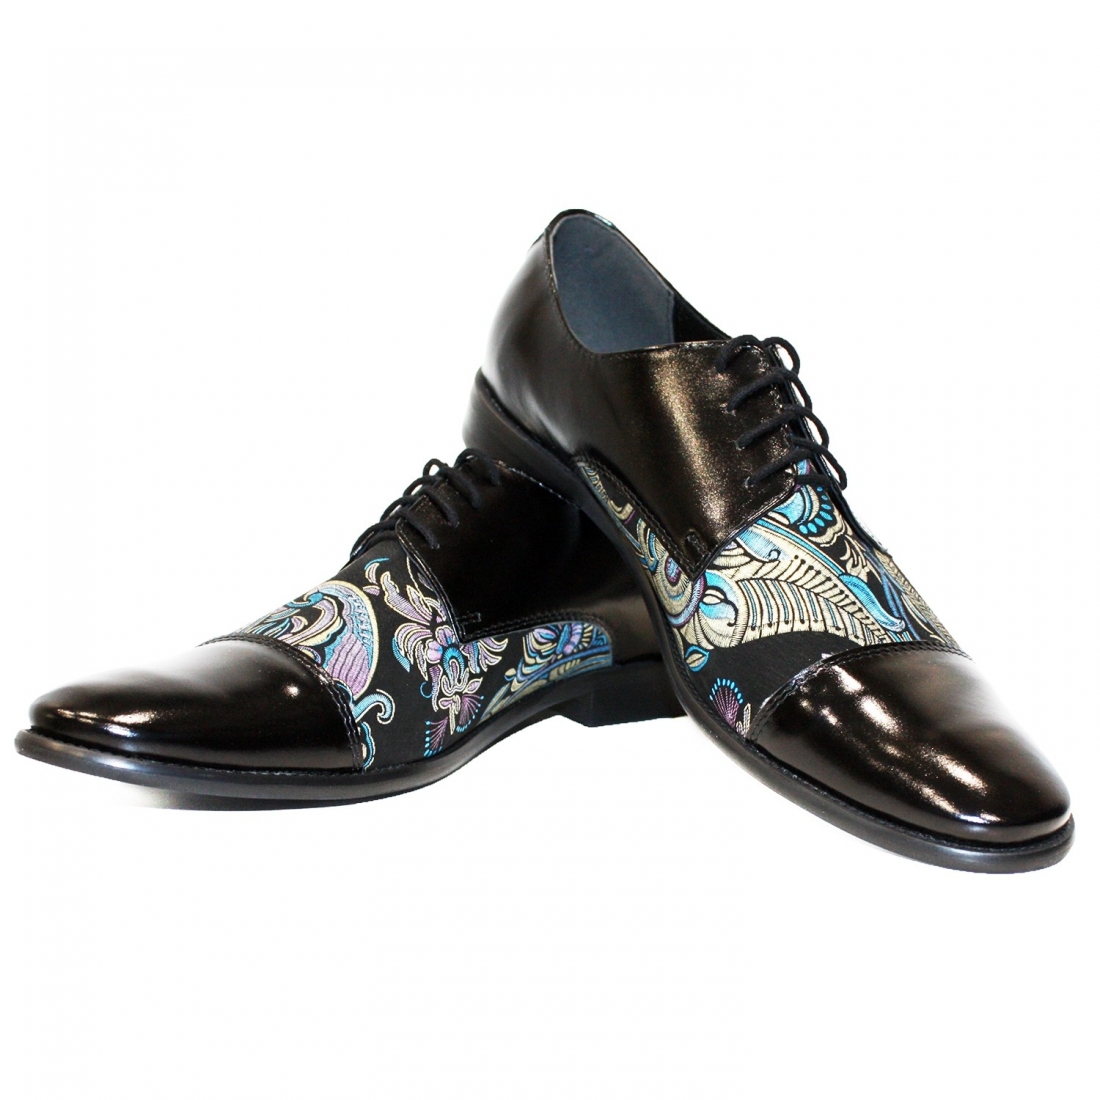 Modello Ulerro - Zapatos Clásicos - Handmade Colorful Italian Leather Shoes